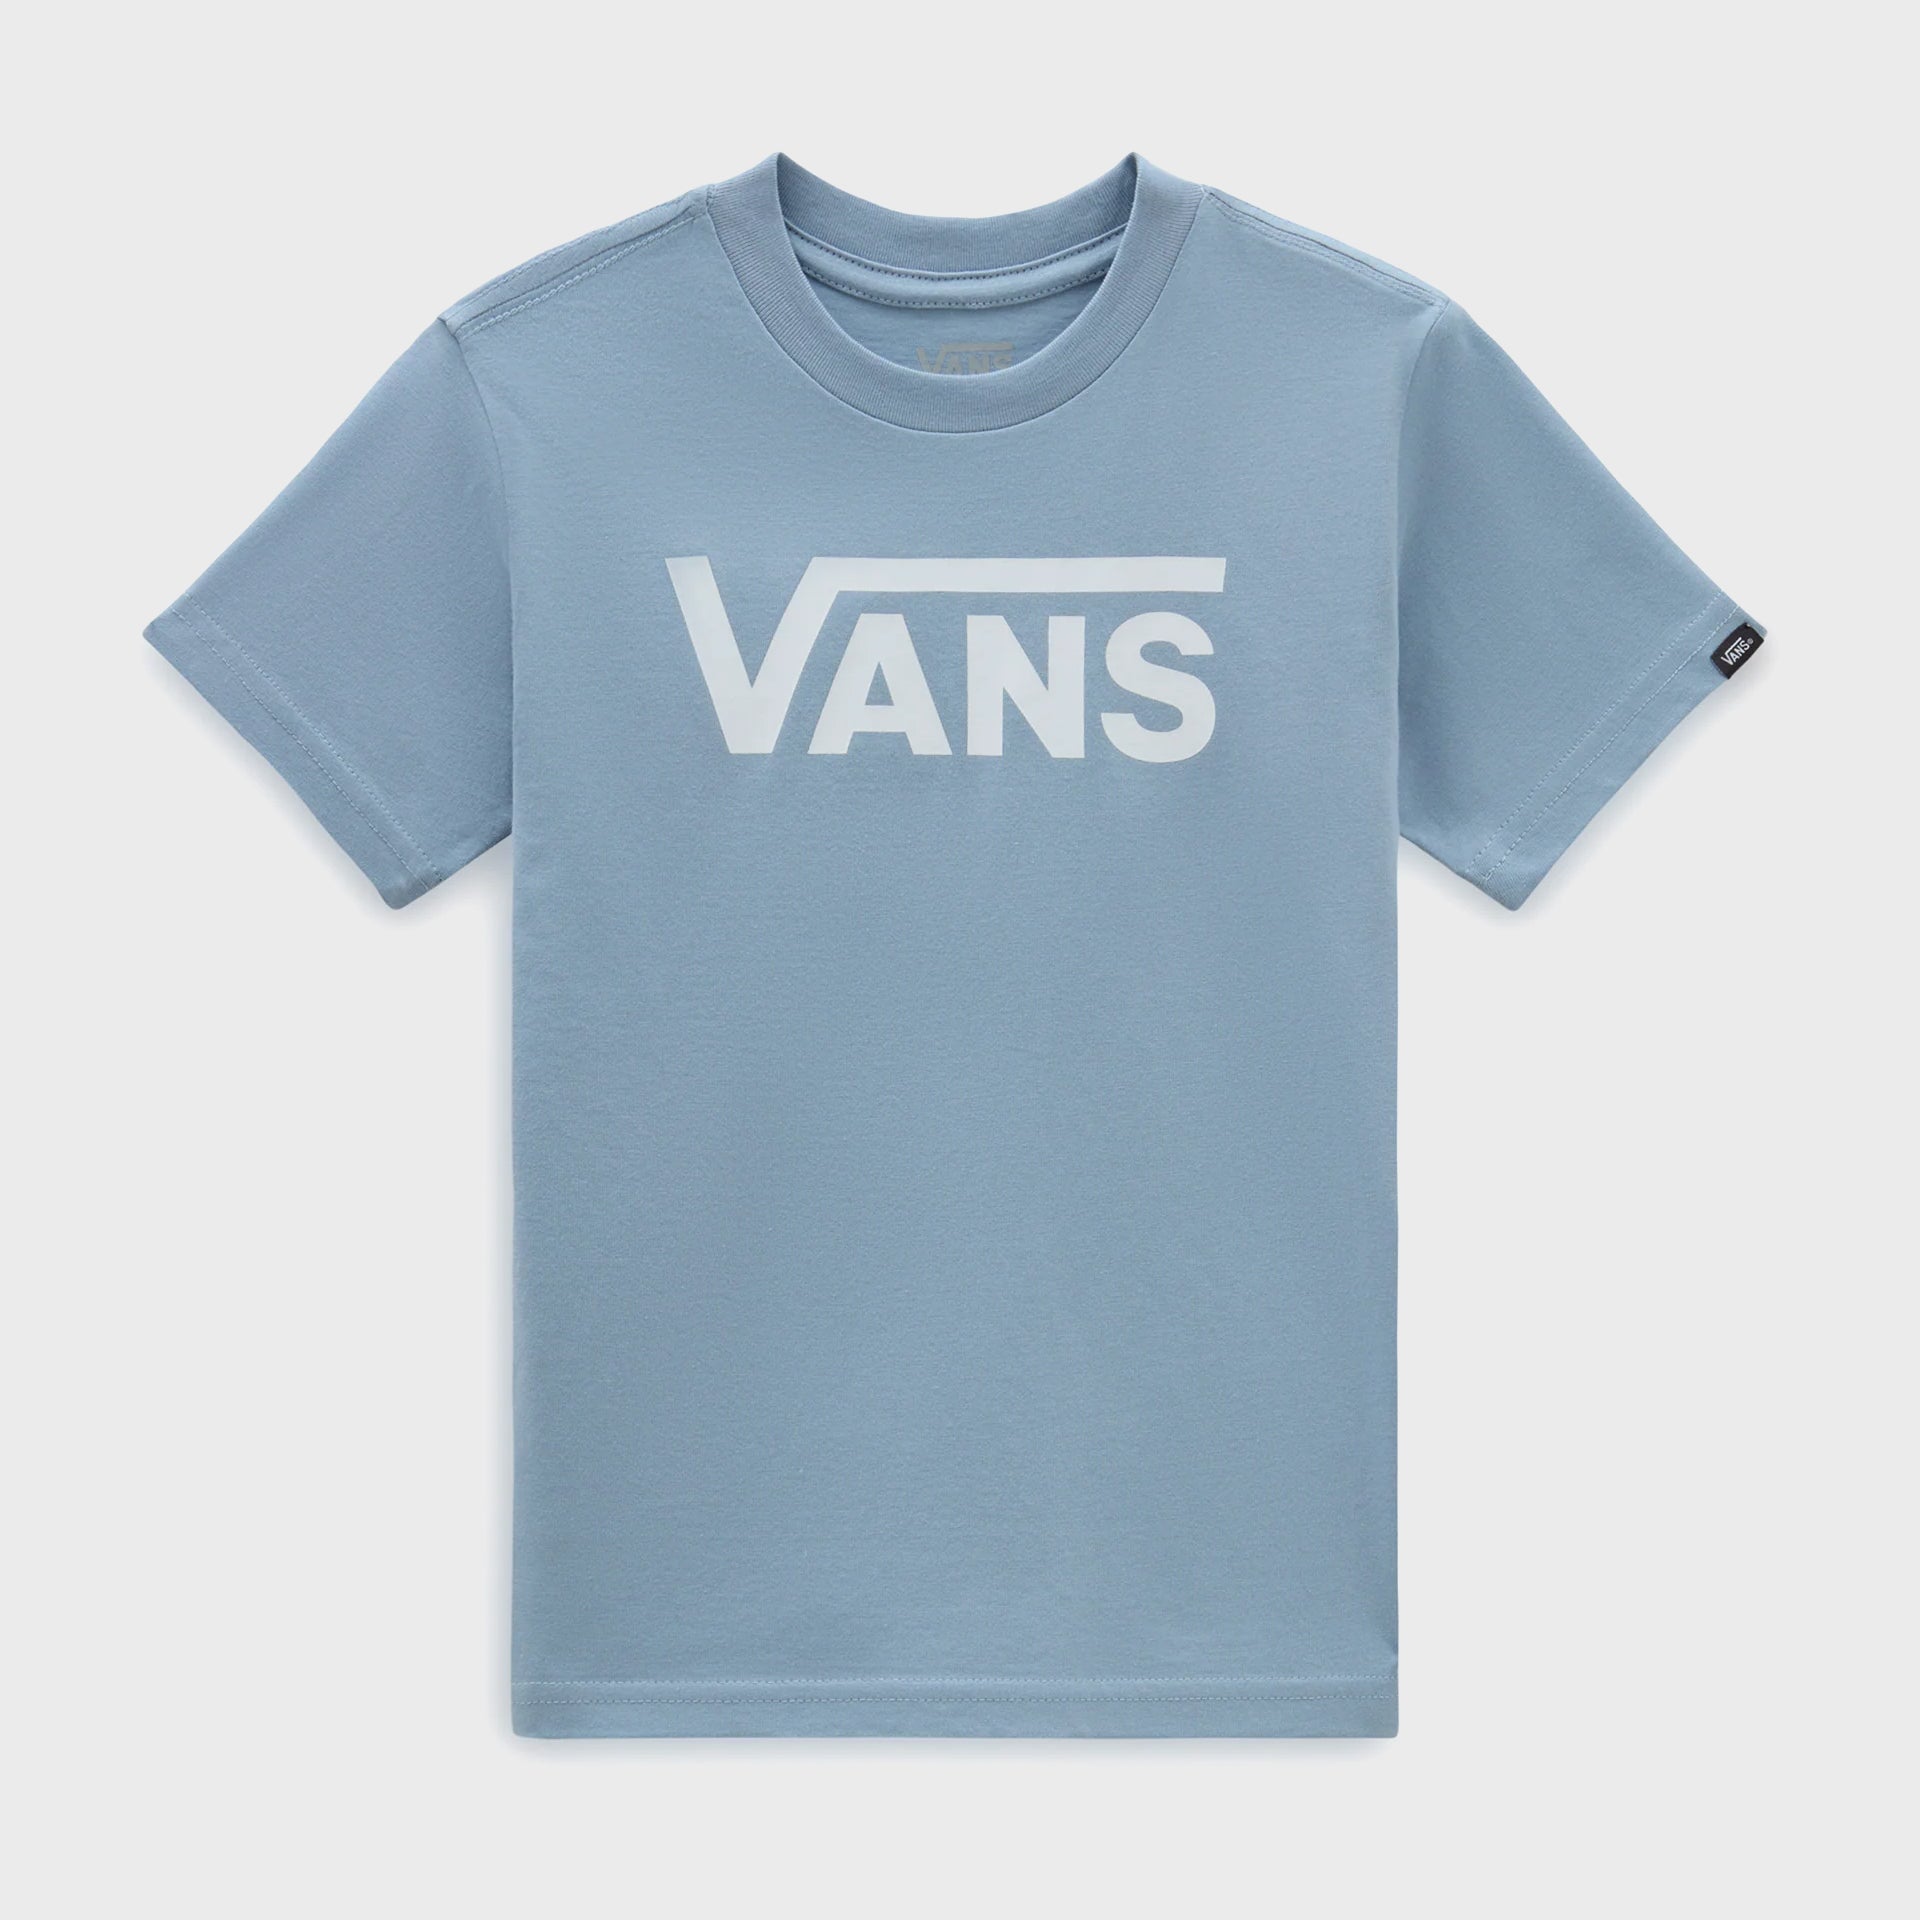 Vans Kids Vans Classic T-Shirt (8-14 Years) - Dusty Blue - ManGo Surfing